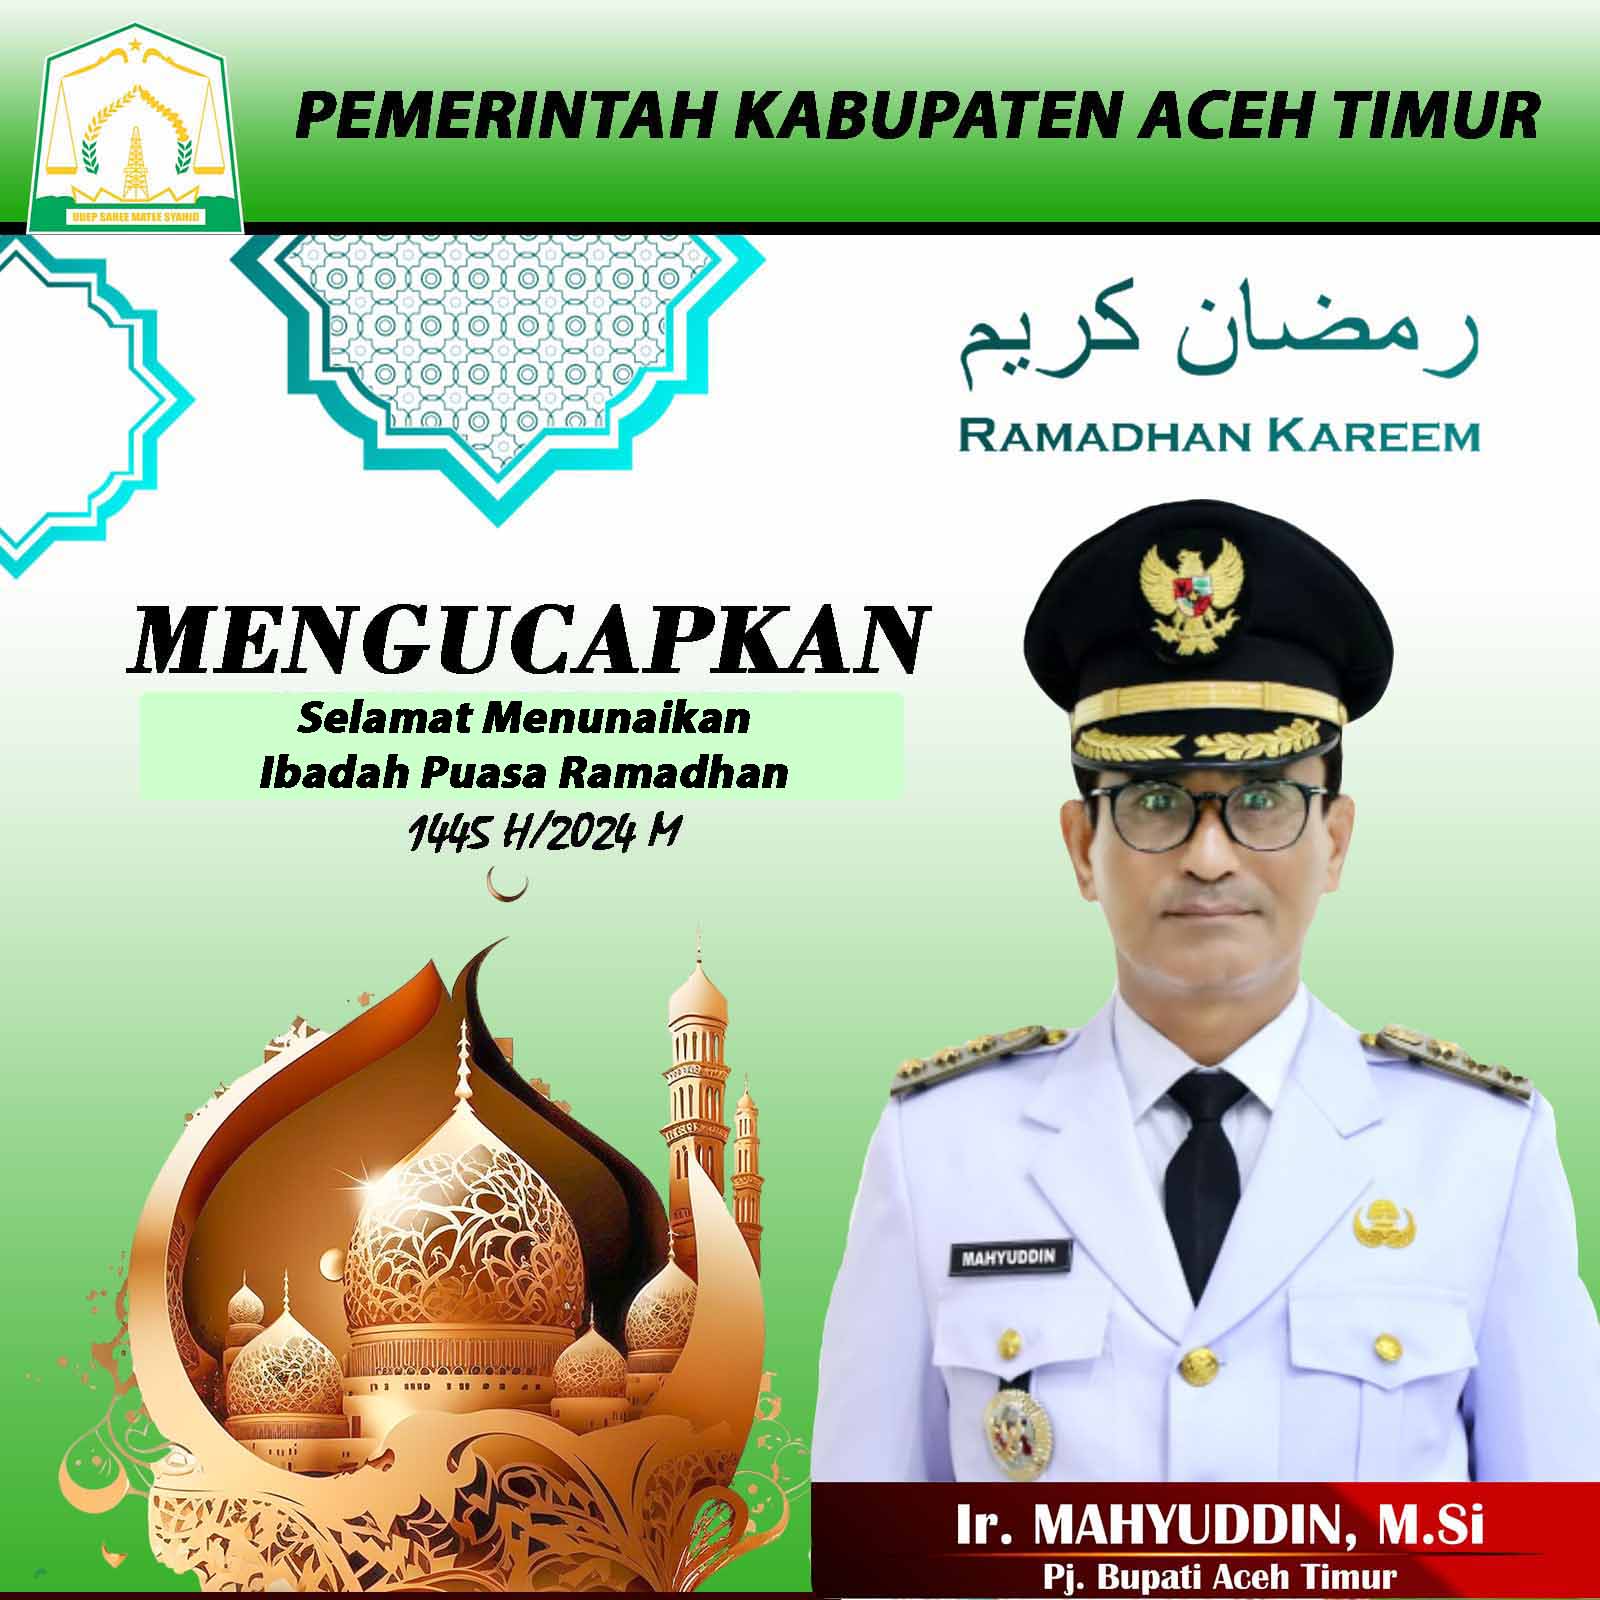 Pemerintah Kabupaten Aceh Timur Mengucapkan Selamat Menunaikan Ibadah Puasa Ramadhan 1445 H/2024 M